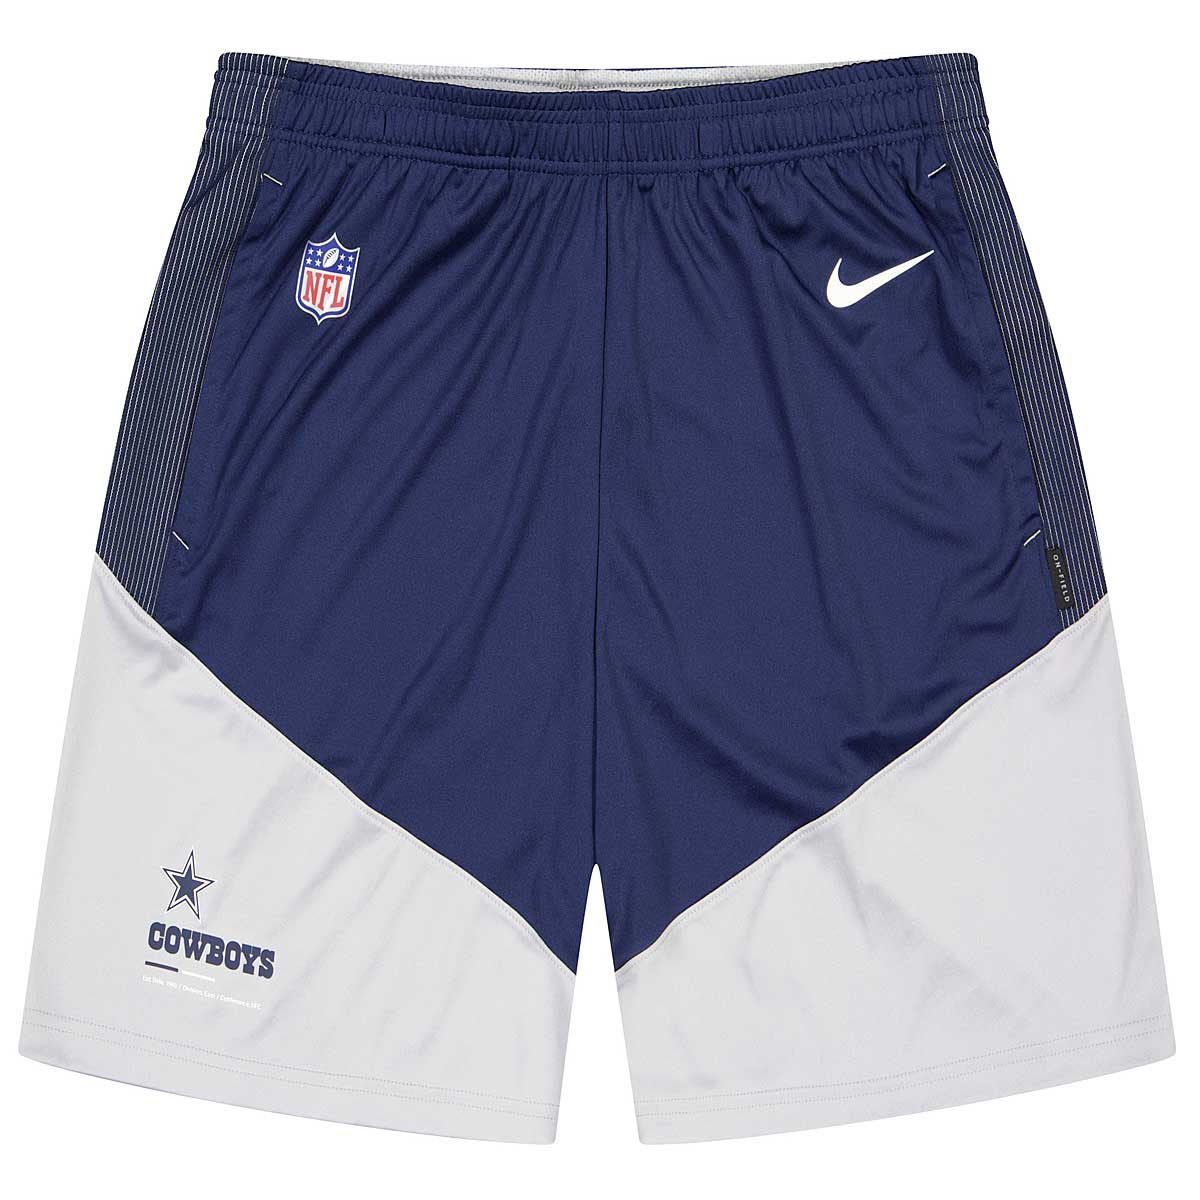 Nike Nfl Dallas Cowboys Dri-Fit Knit Shorts, College Navy-Wolf Grey-College Navy Dallas Cowboys